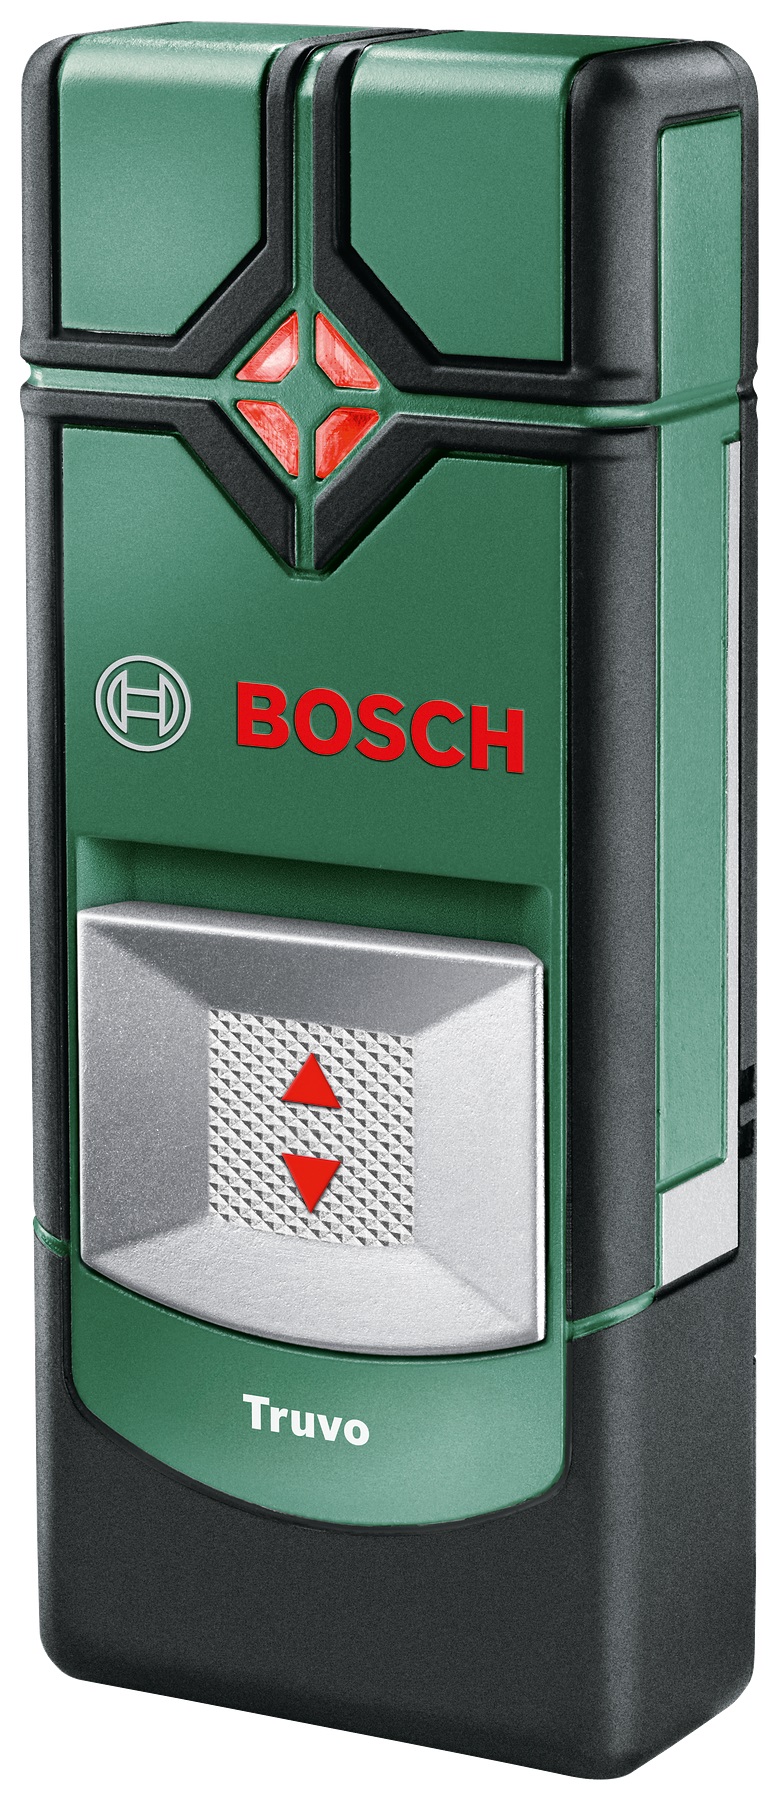 Bedste Bosch Karton i 2023